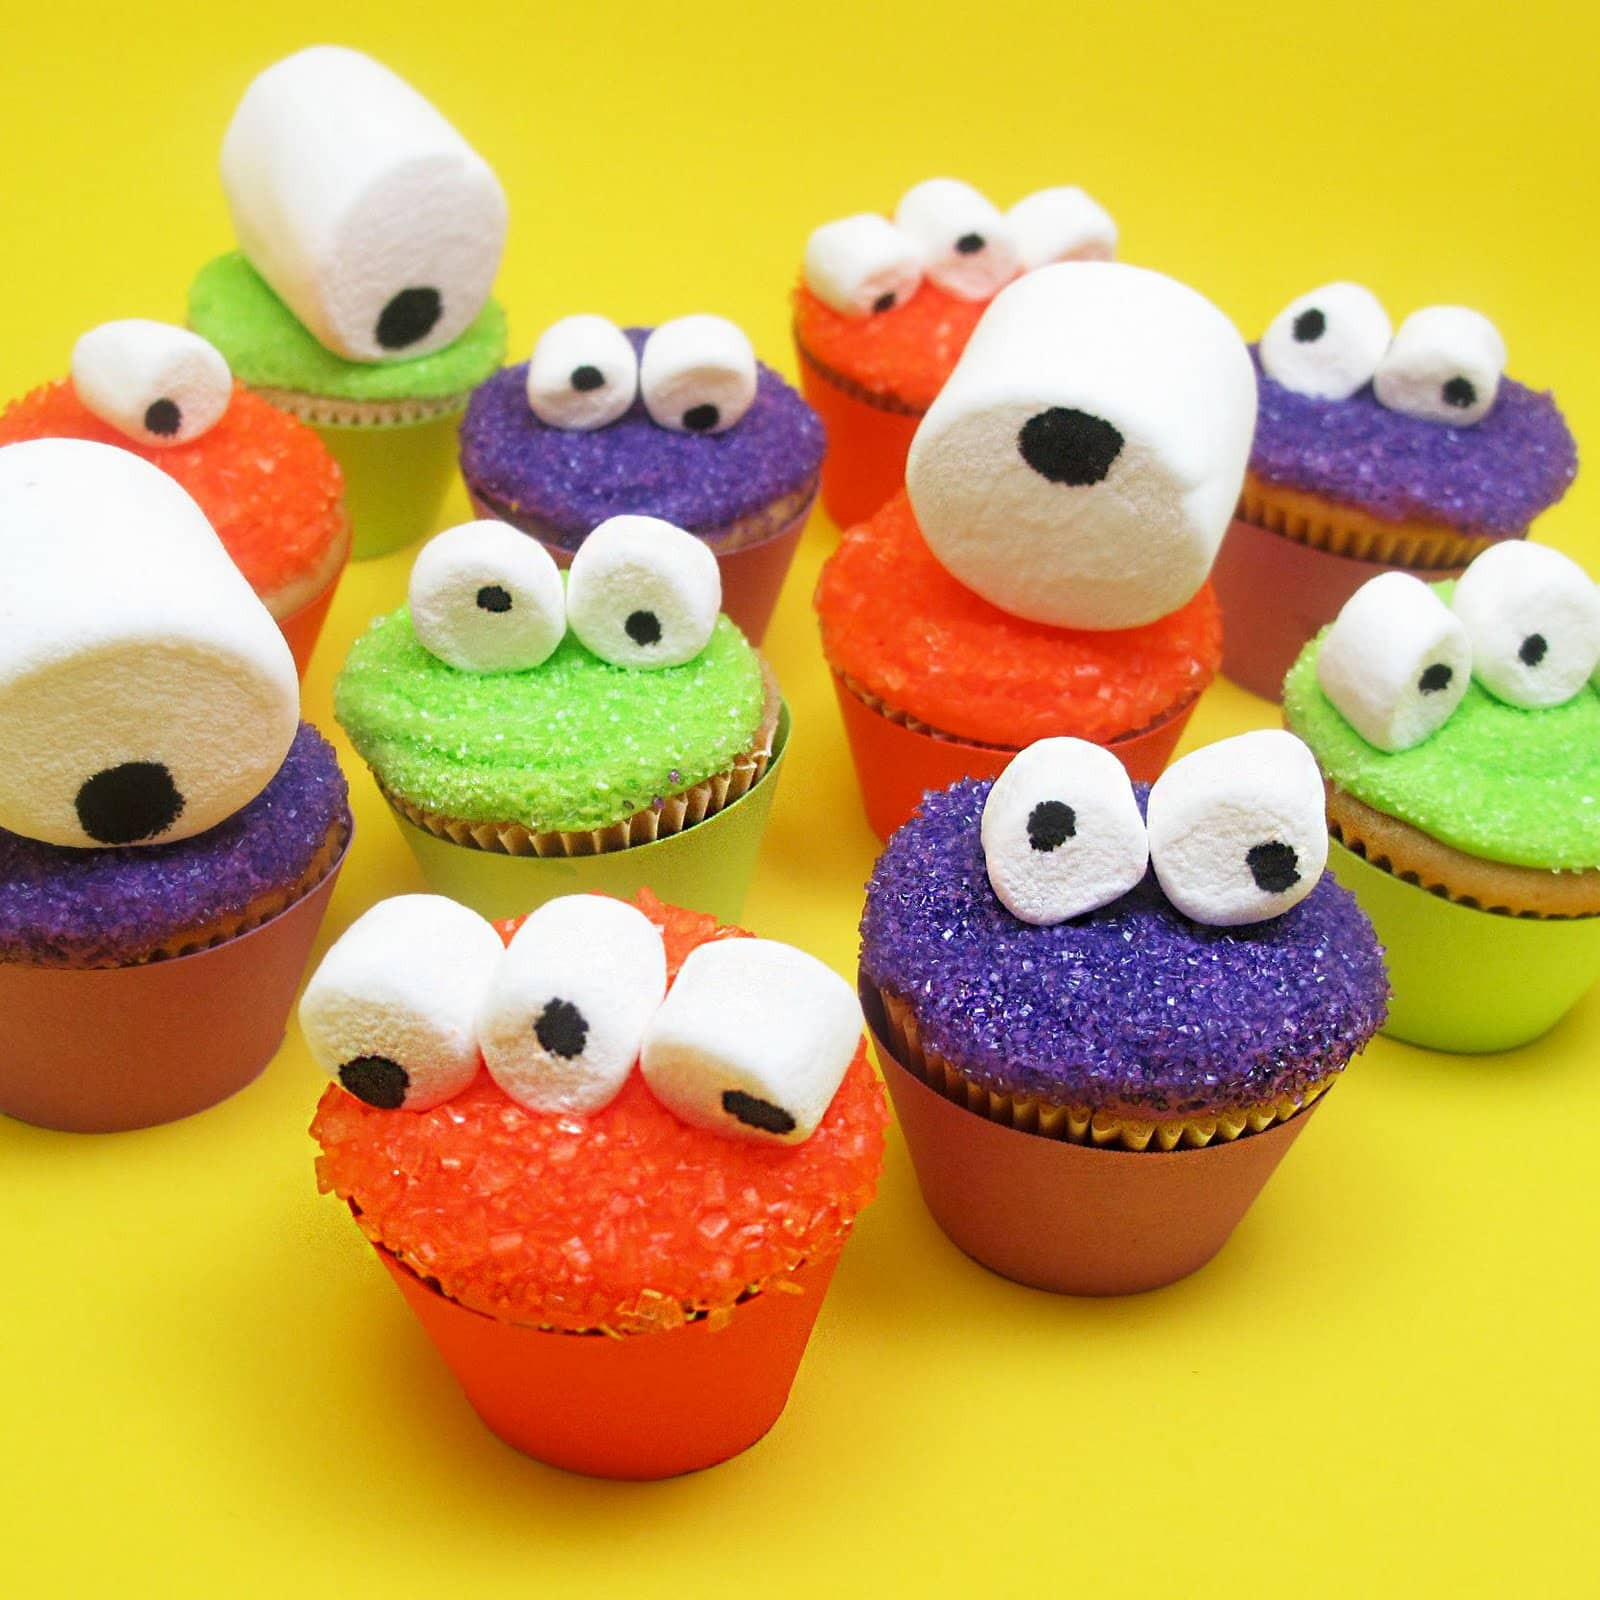 Halloween Mini Cupcakes
 mini monster cupcakes for an easy Halloween treat idea